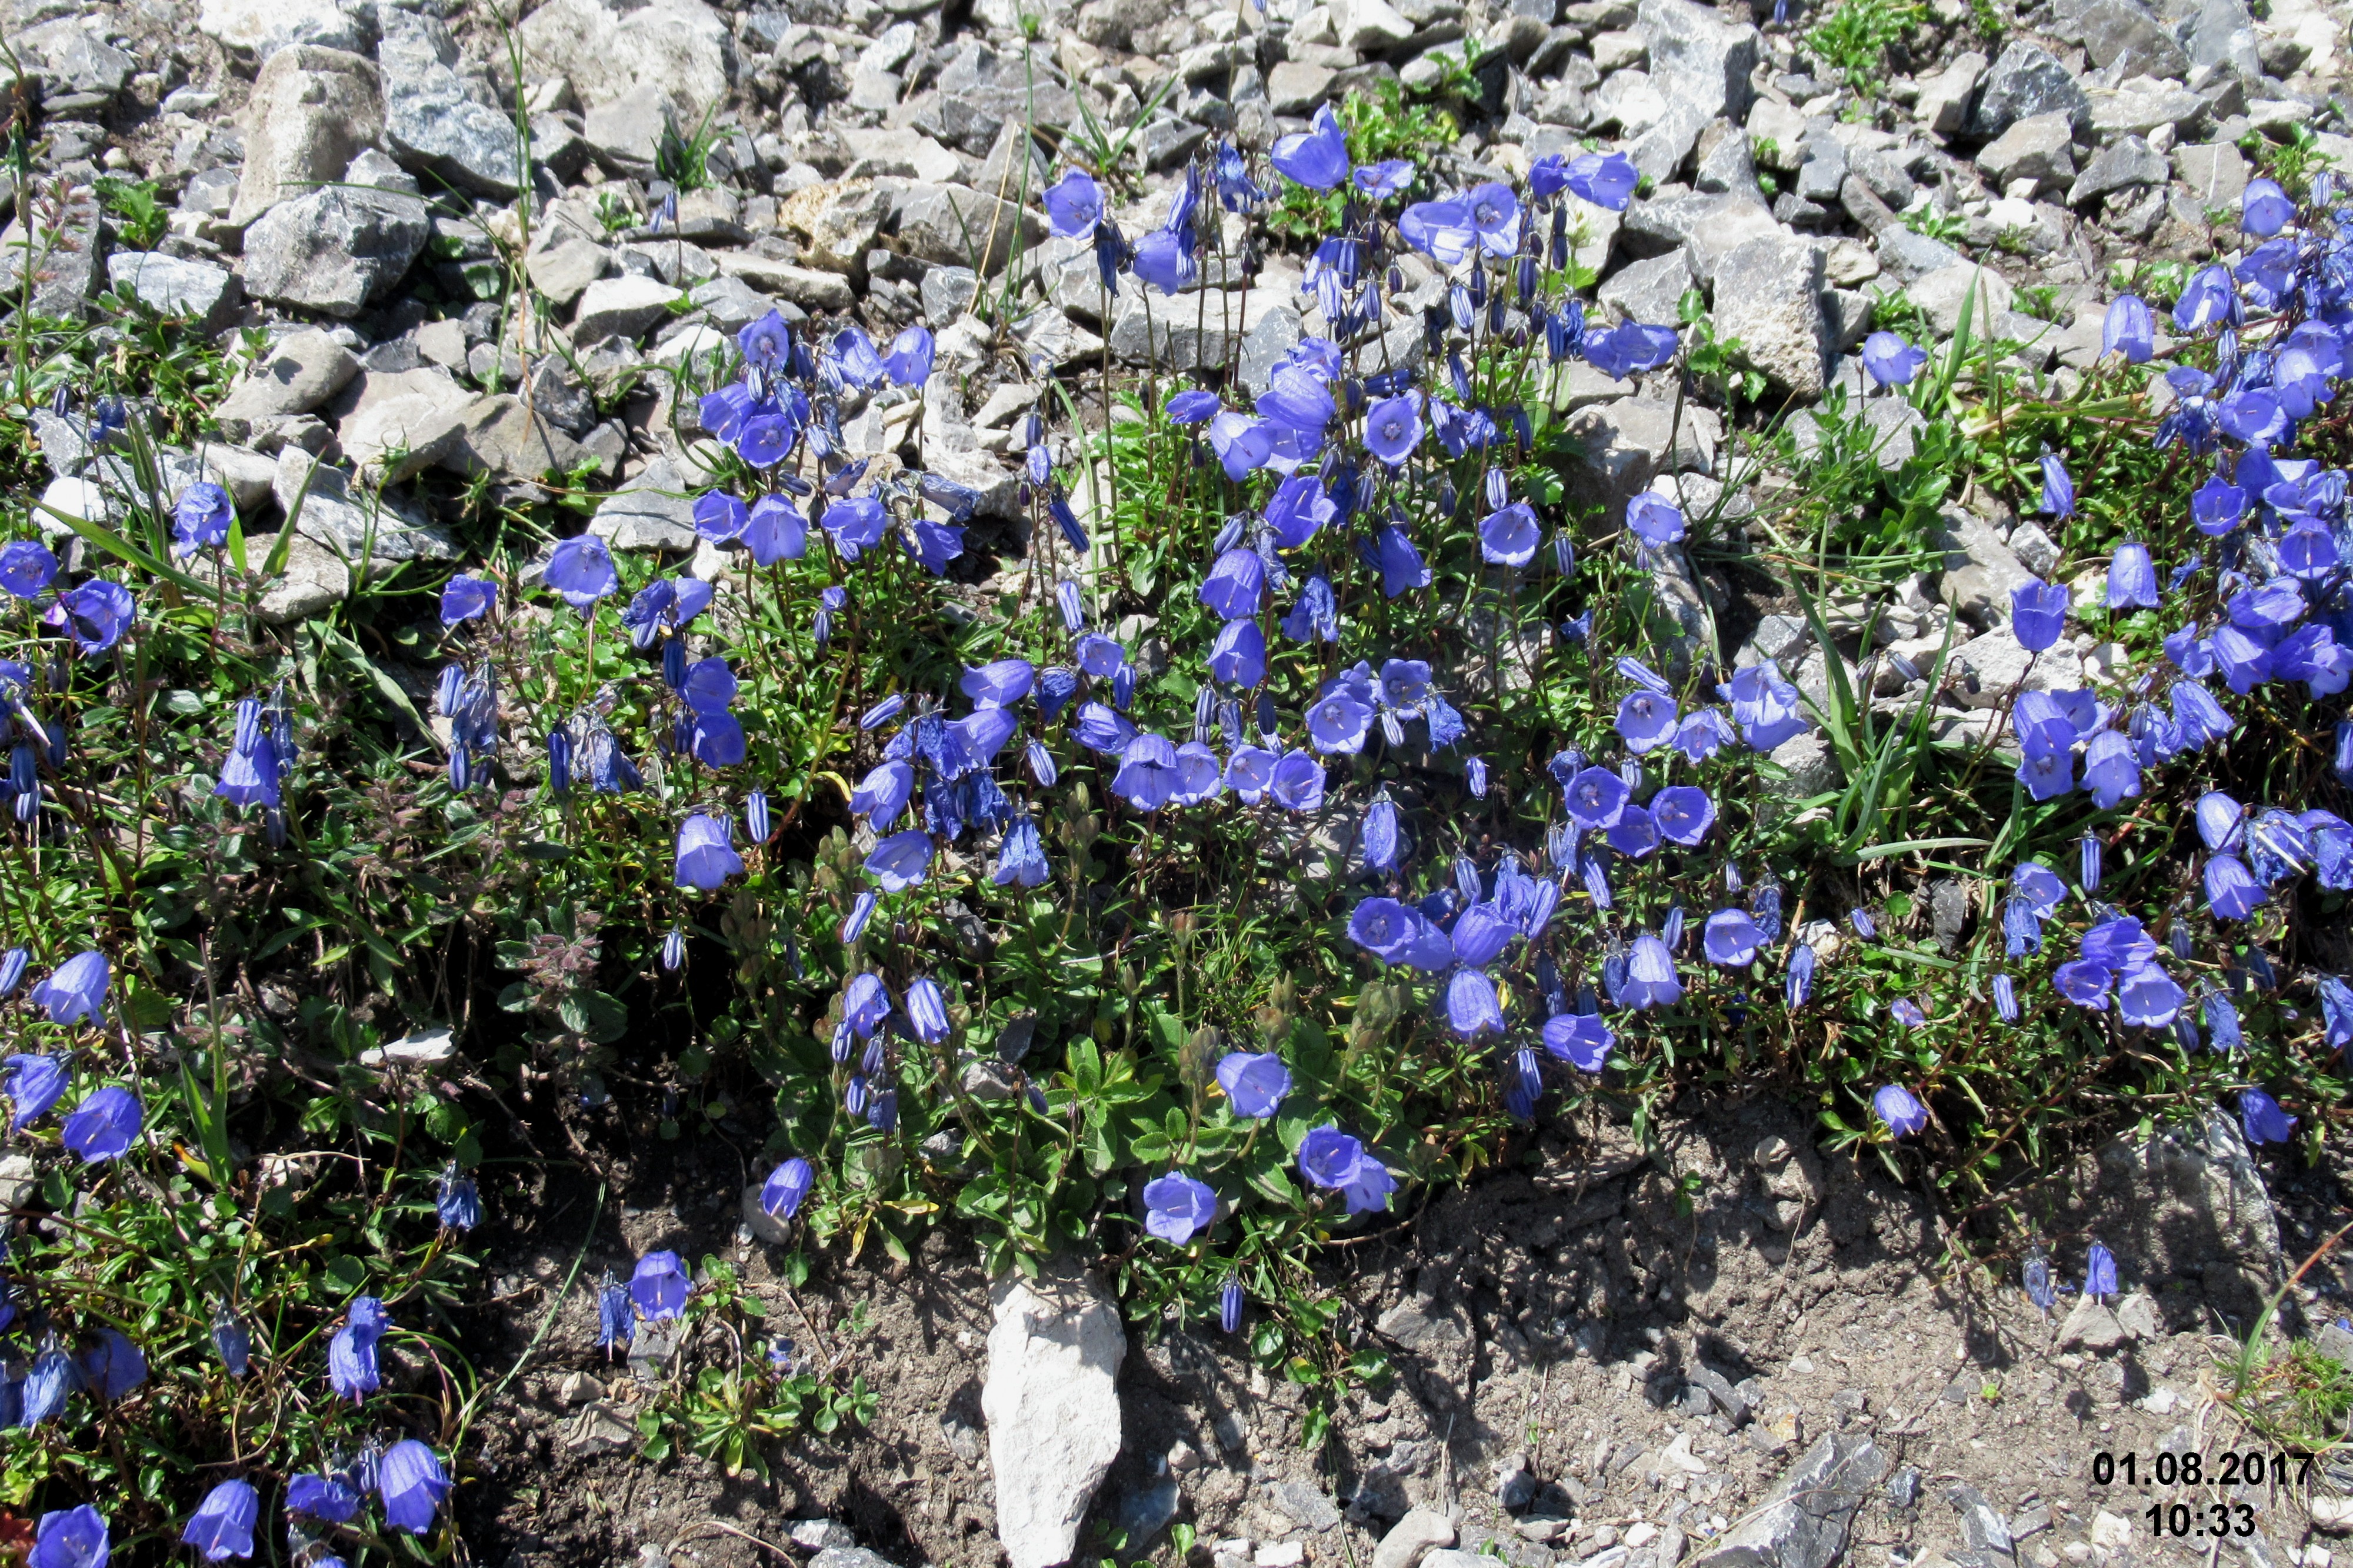 Alpine flora - a tiny harebell (Gru) (36879812114)